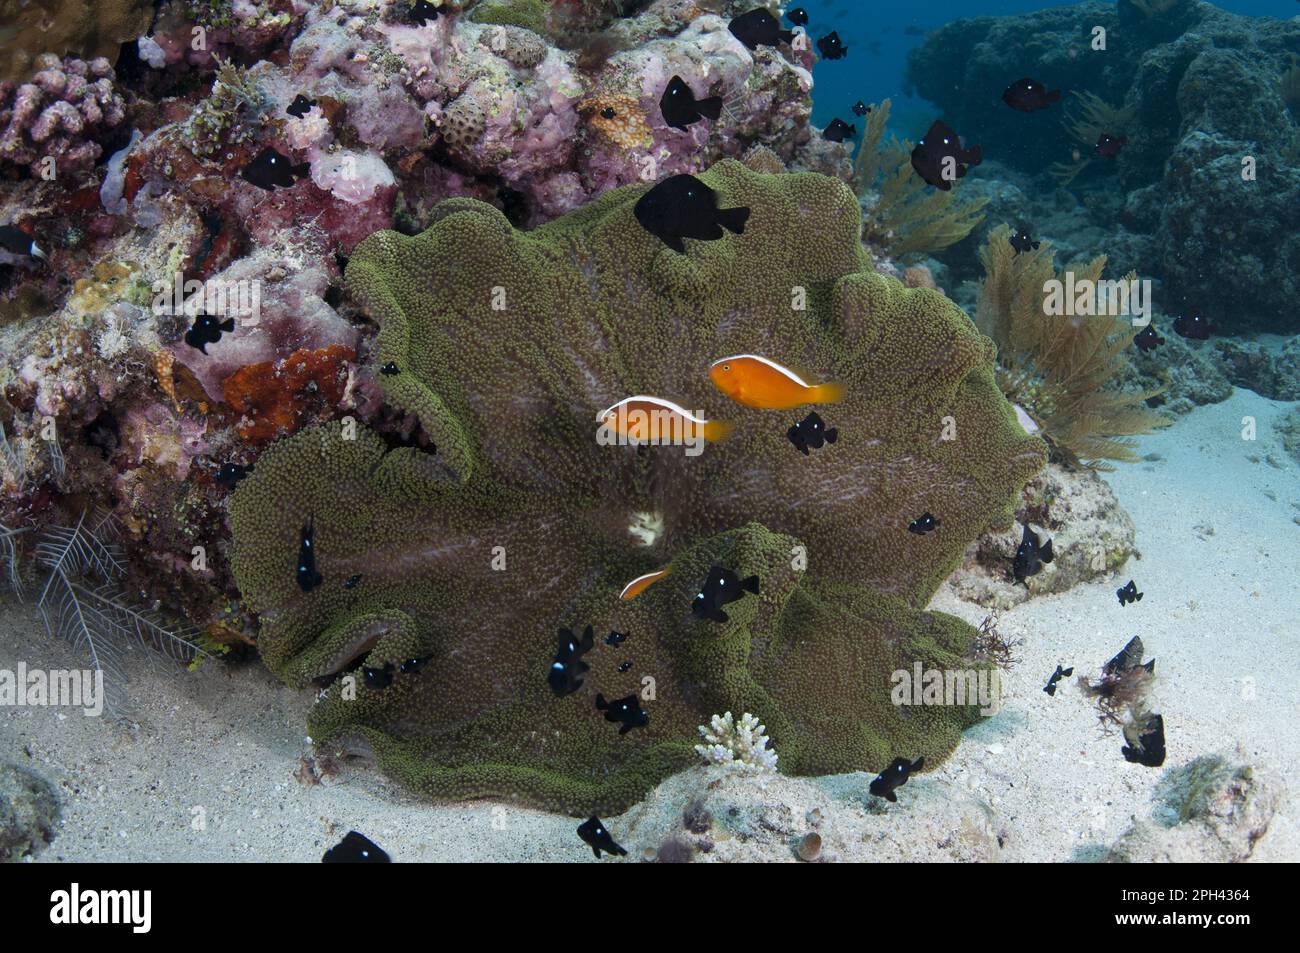 Orange skunk clownfish (Amphiprion sandaracinos) and threespot dascyllus (Dascyllus trimaculatus), swimming next to the Magnificent magnificent sea Stock Photo